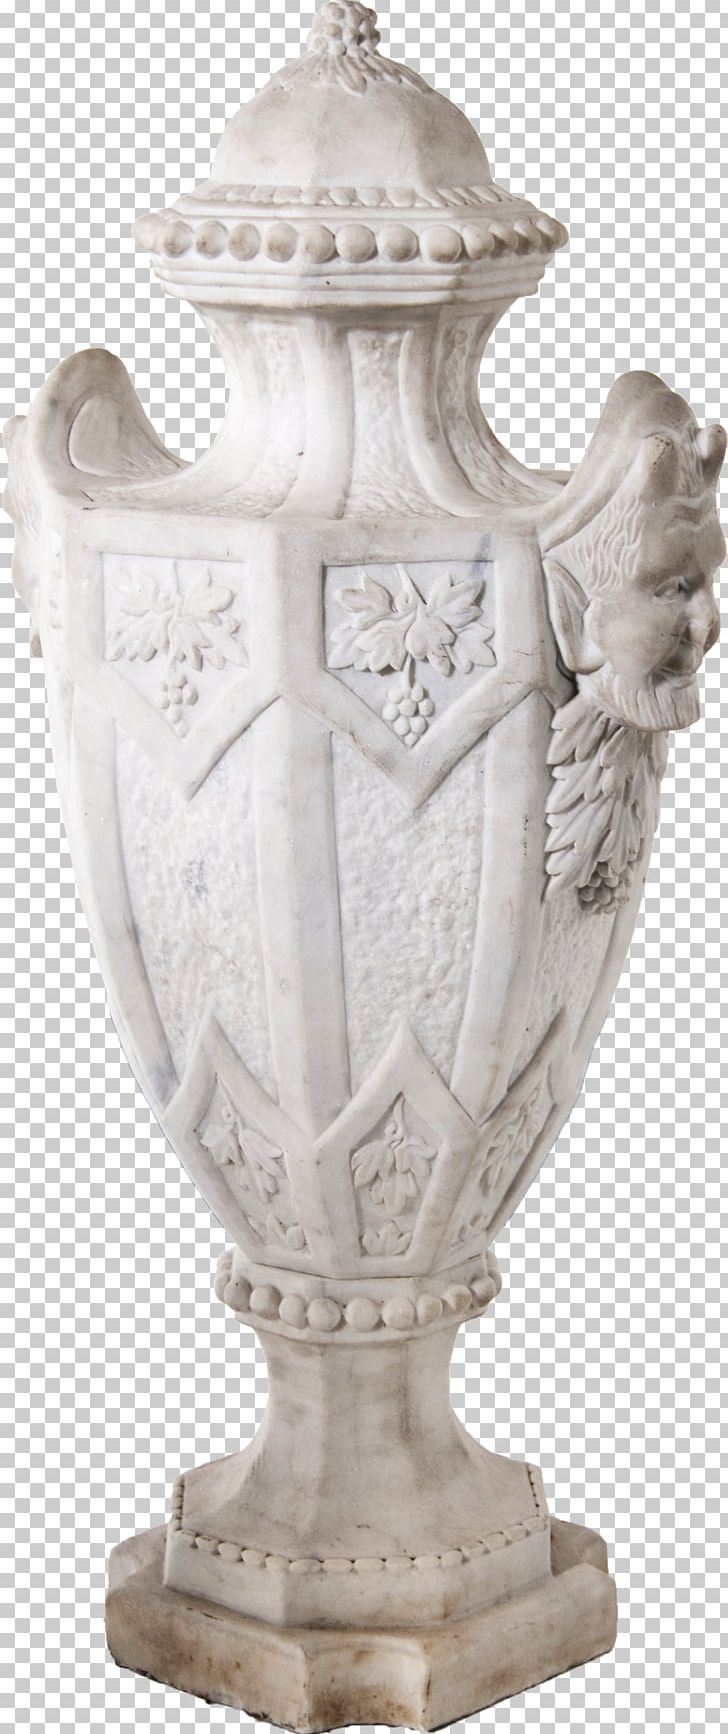 Vase Furniture Stone Carving Ceramic PNG, Clipart, Art, Artifact, Carving, Cast Stone, Ceramic Free PNG Download